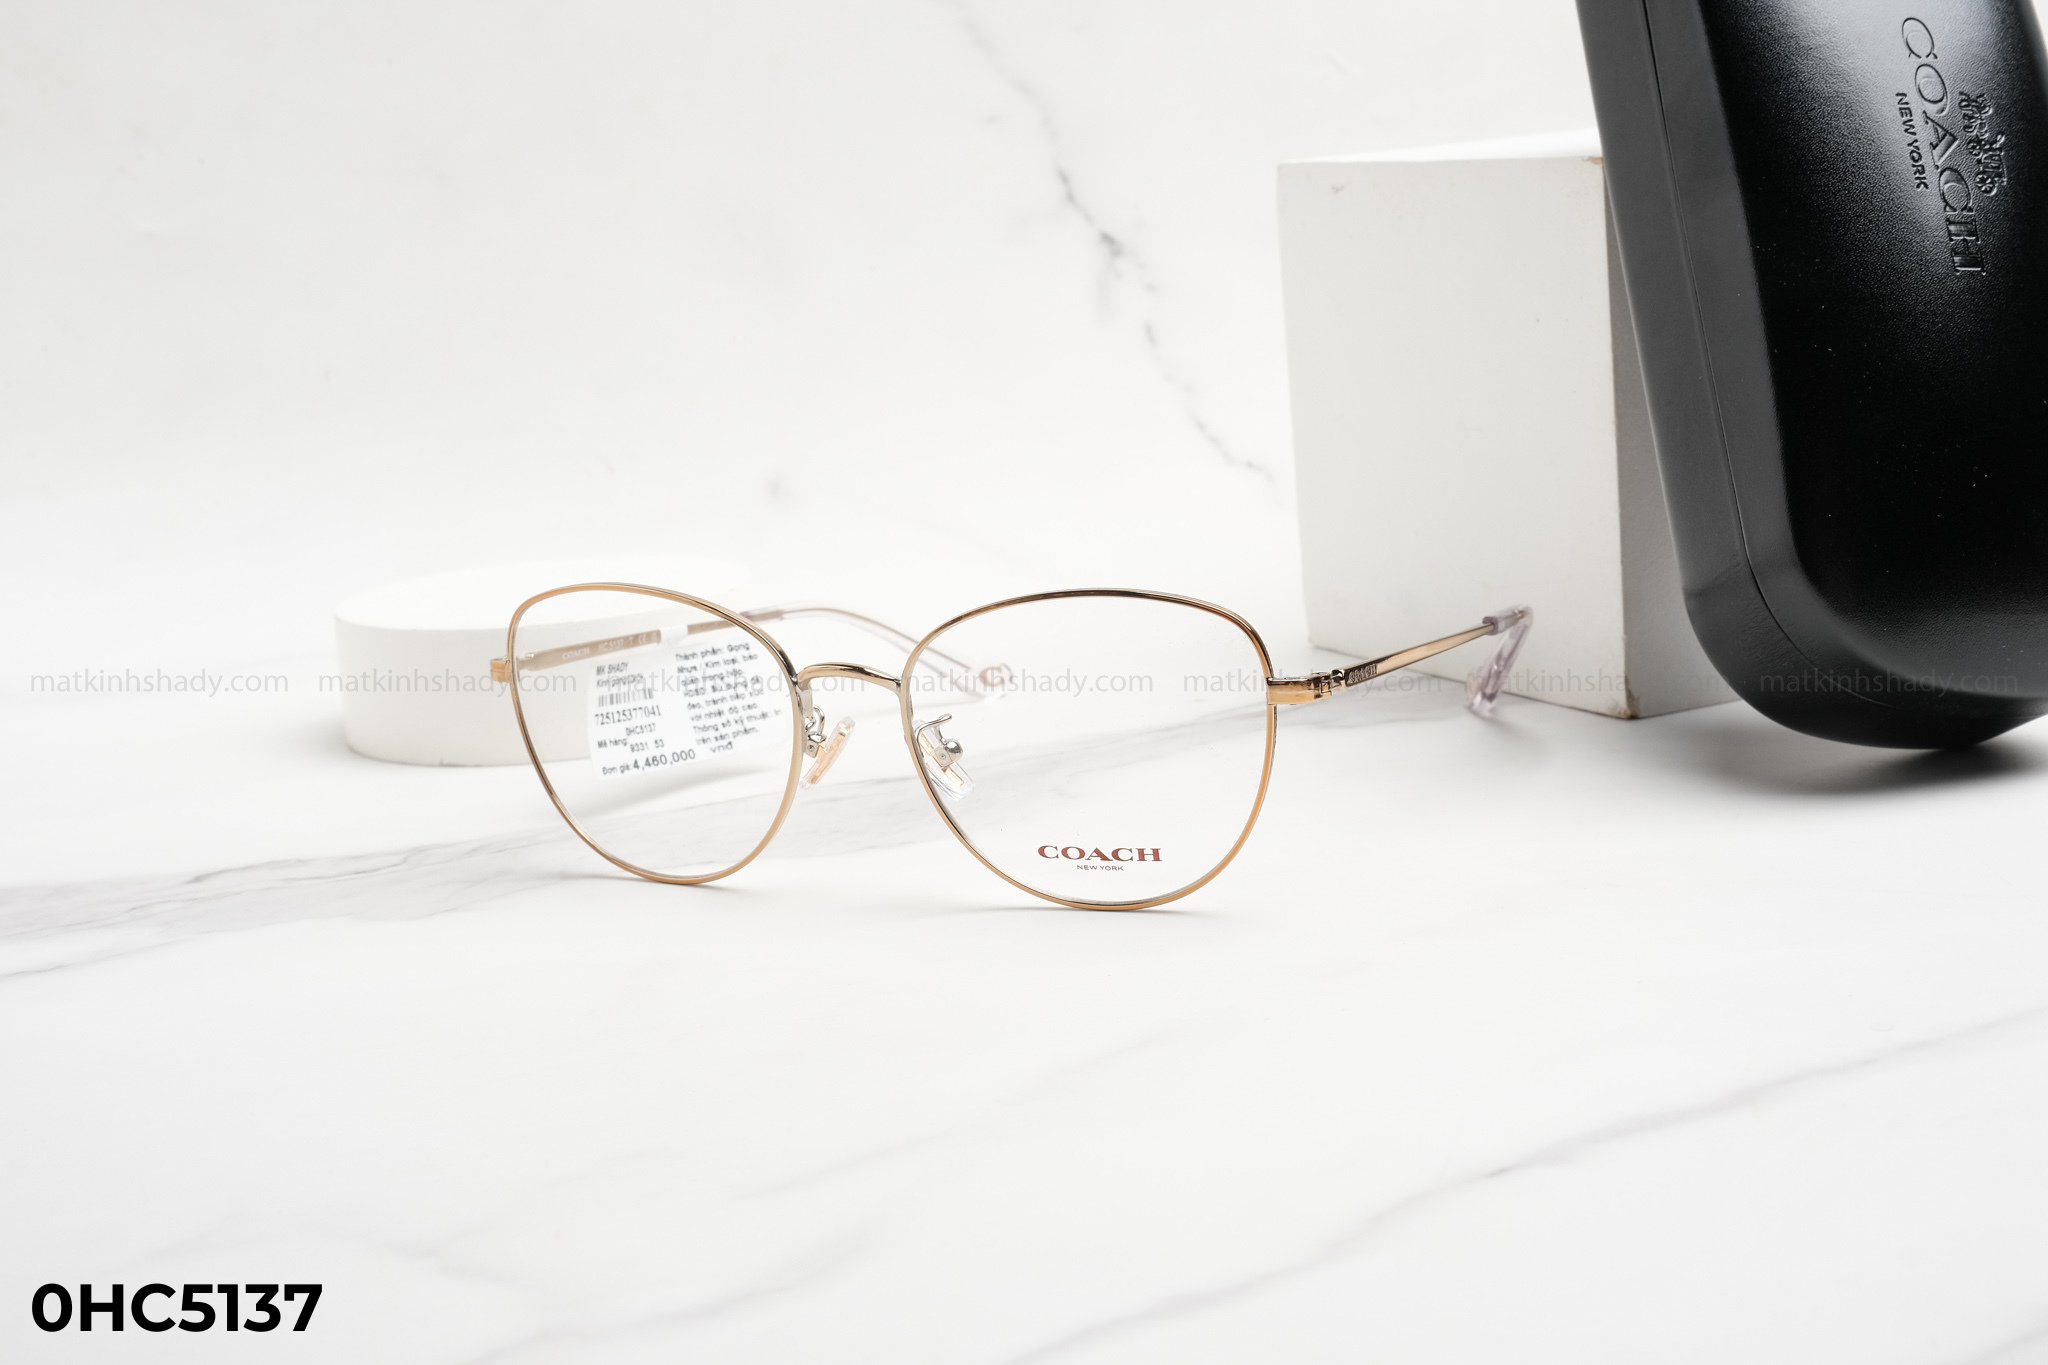  Coach Eyewear - Glasses - 0HC5137 